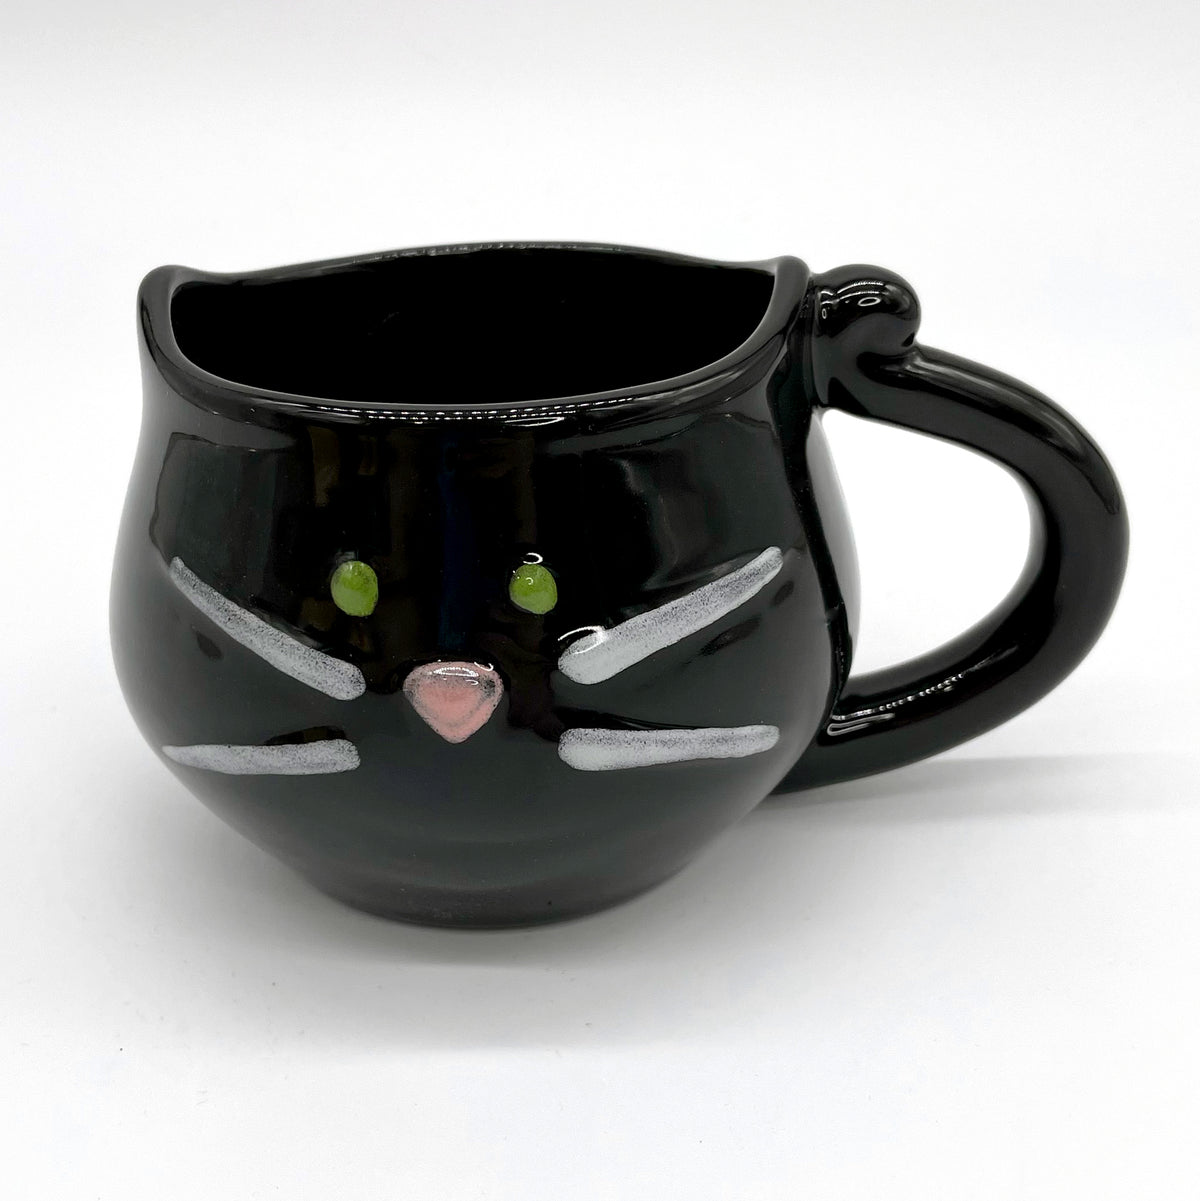 Cat Mug: White or Black